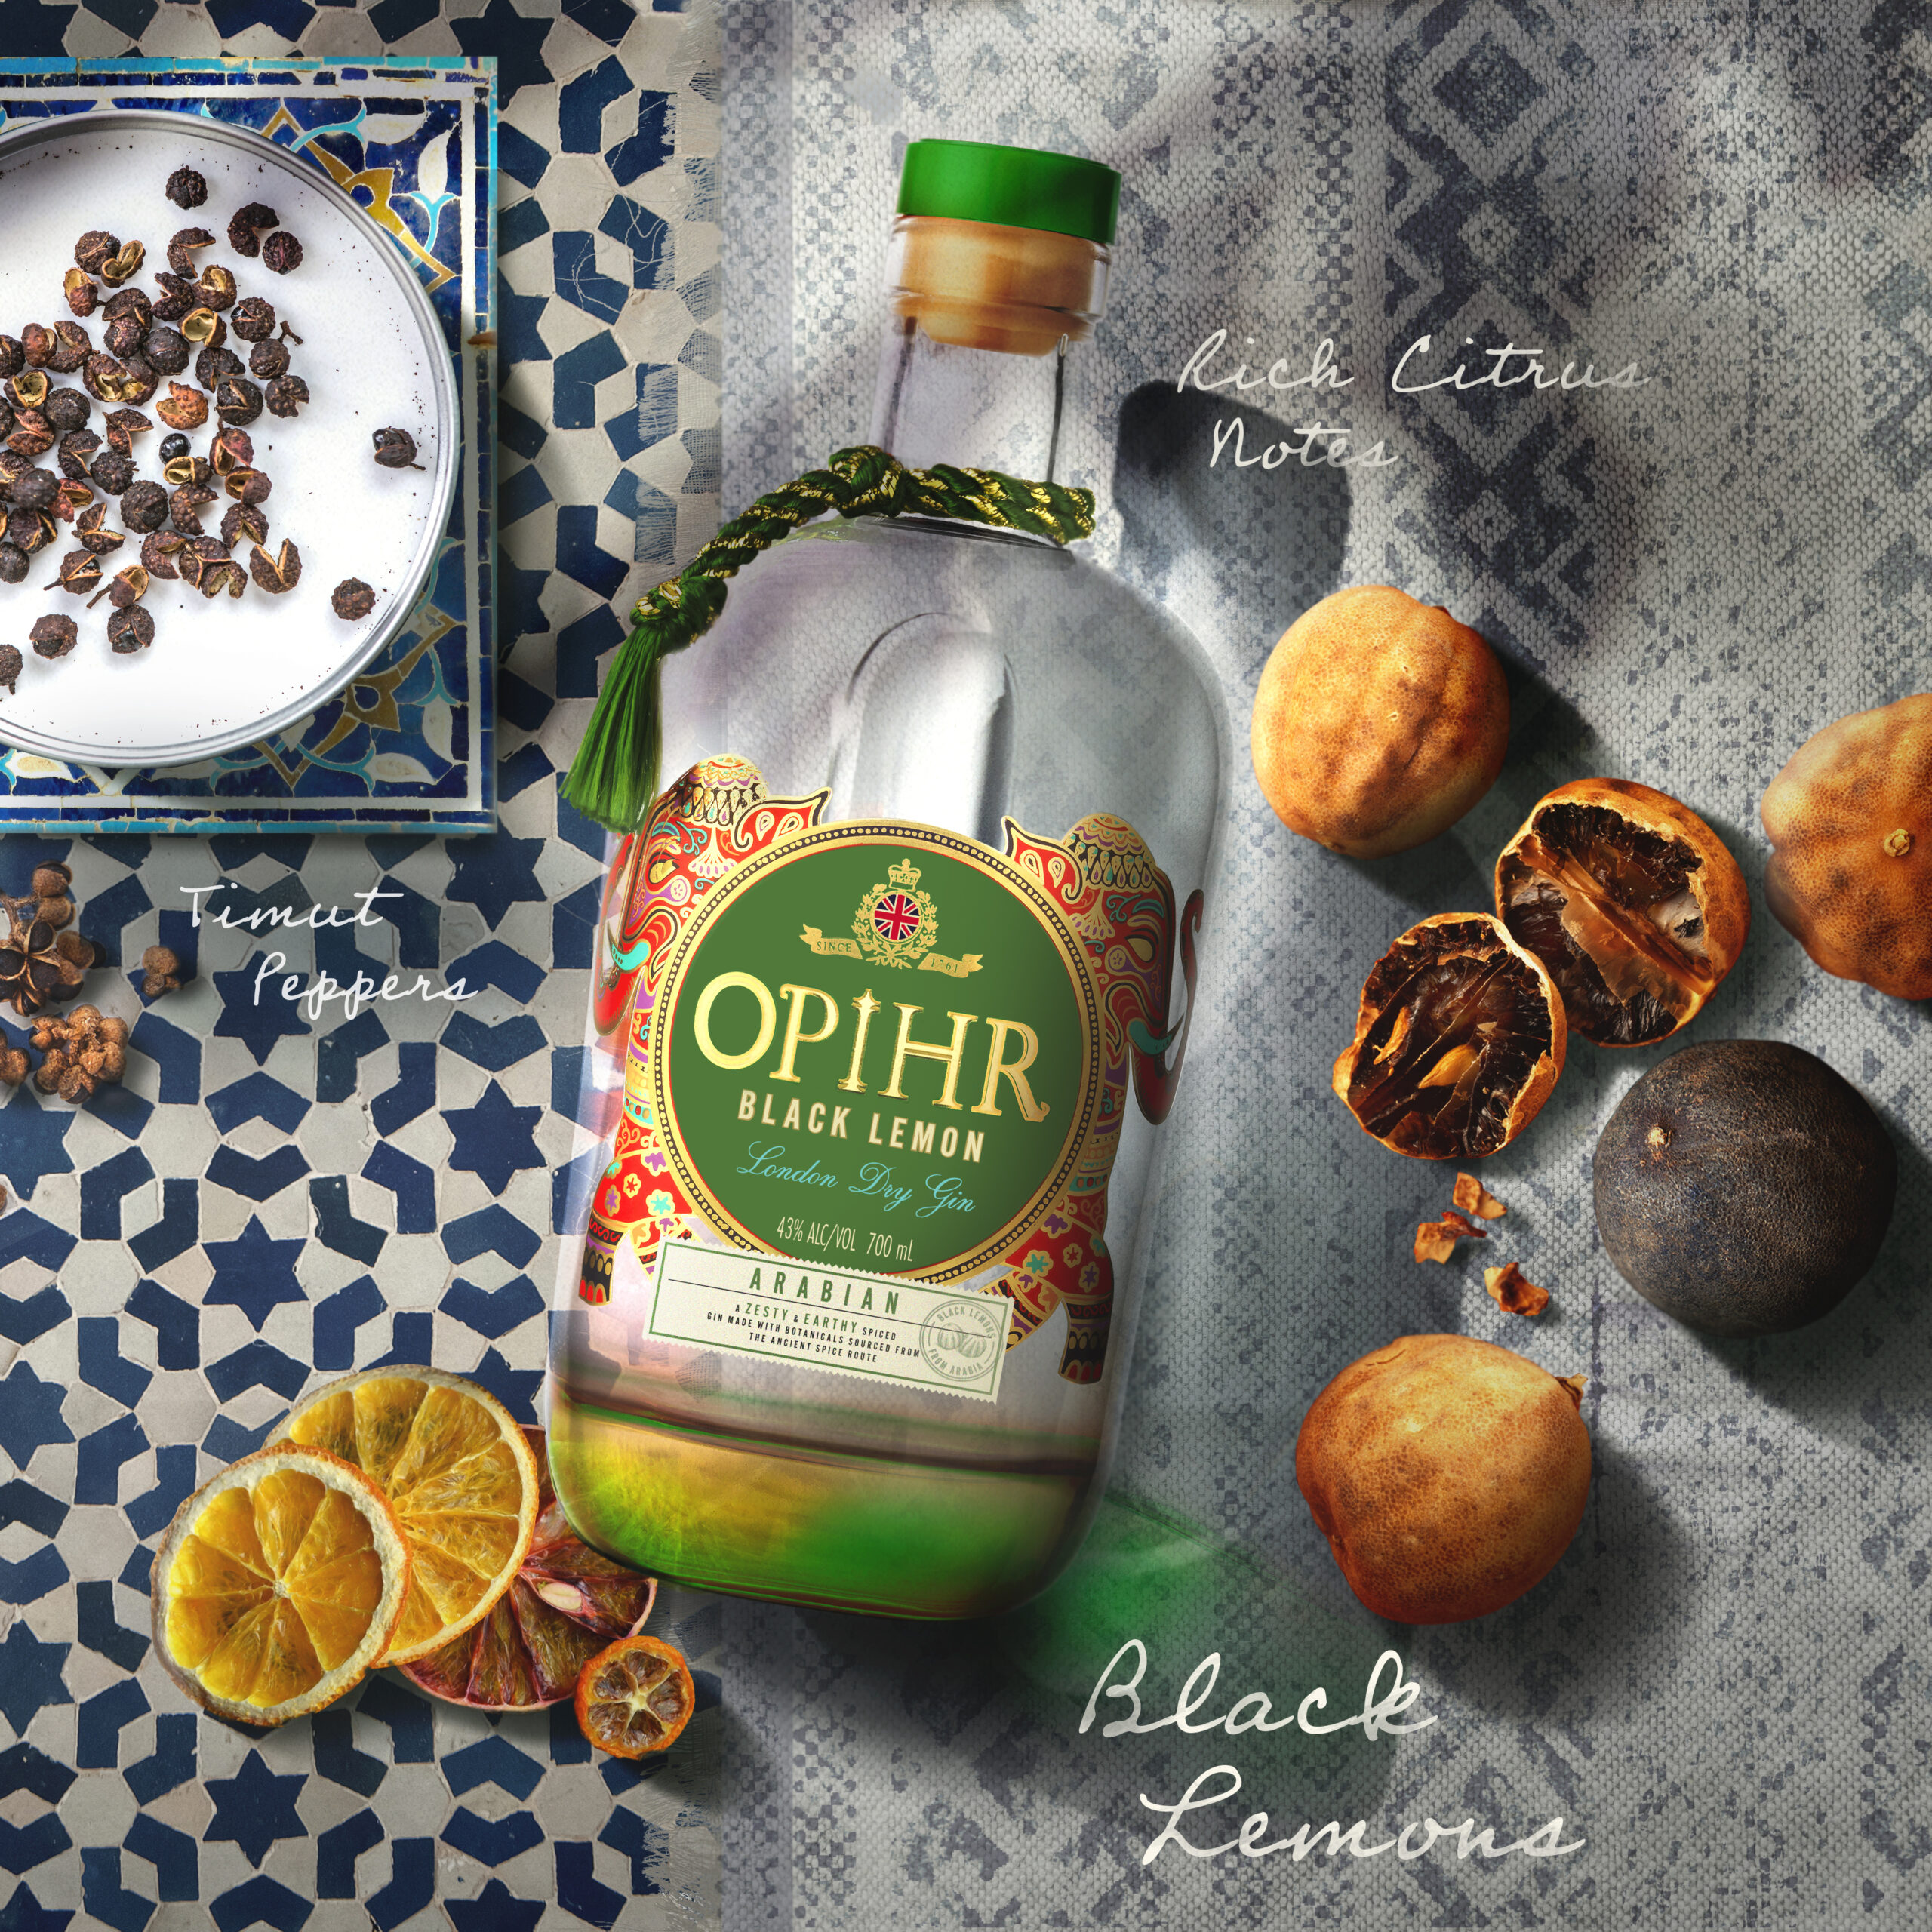 Ophir unveils new Black Lemon edition